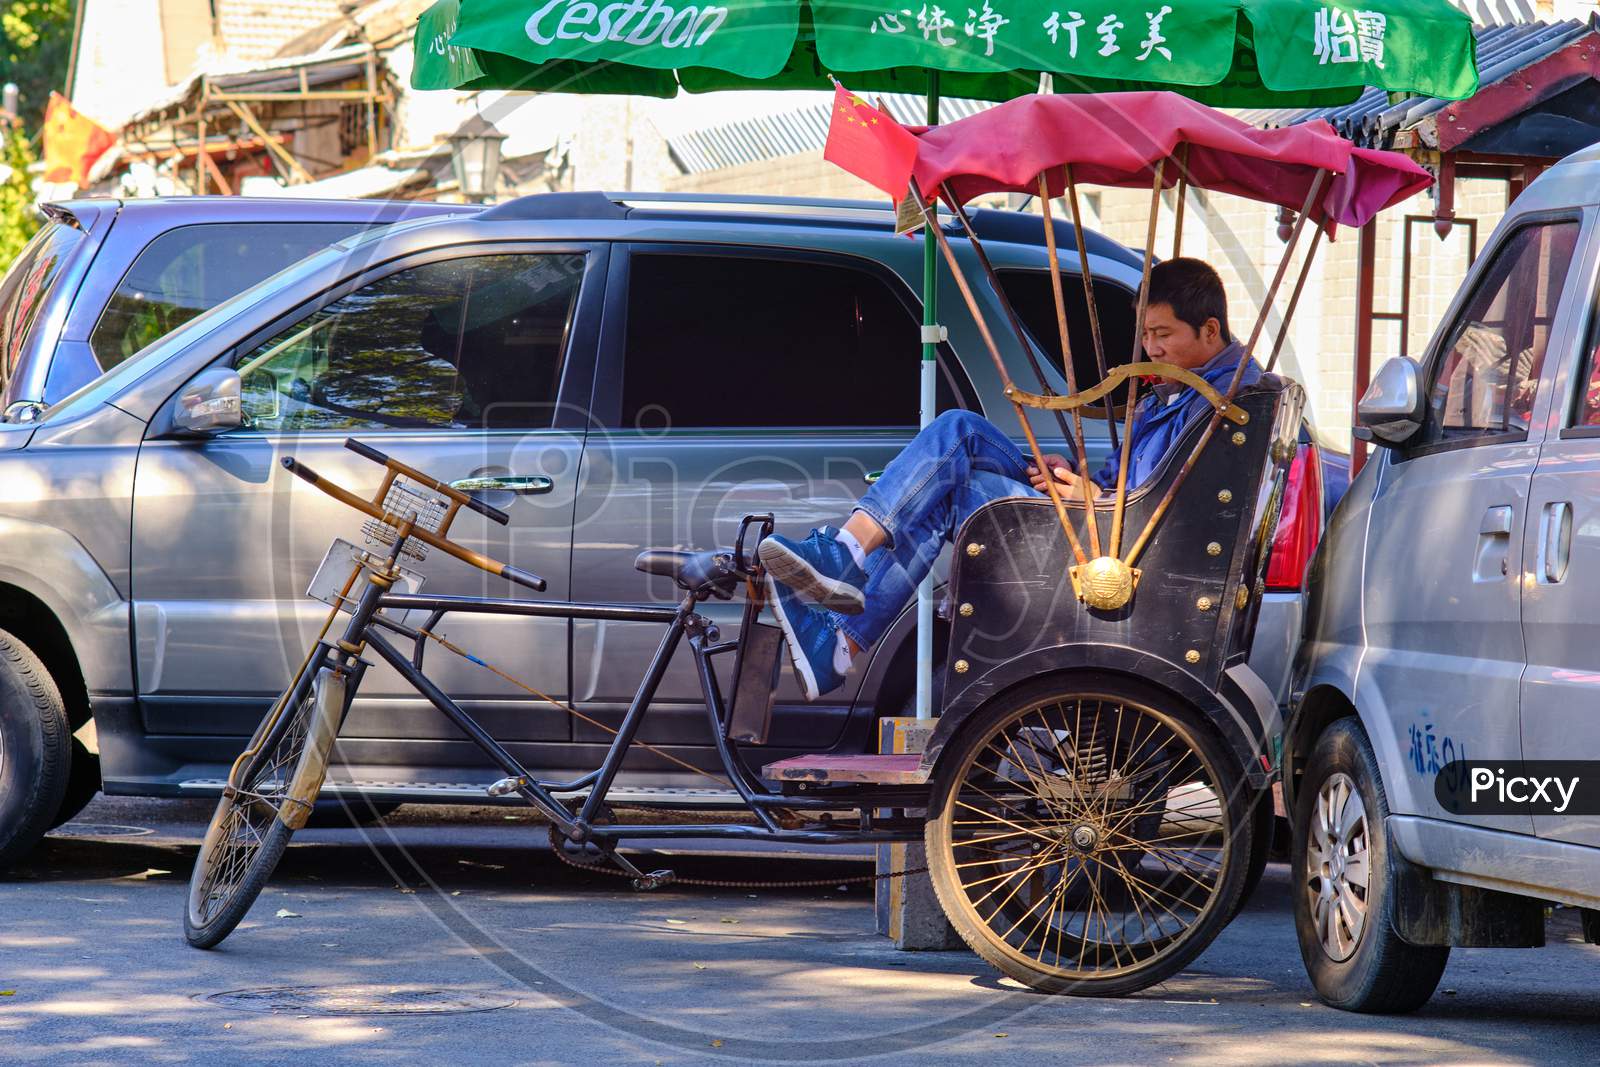 Tourist Bicycle Rickshaw Driver Taking A Break From Work In Beijing, China